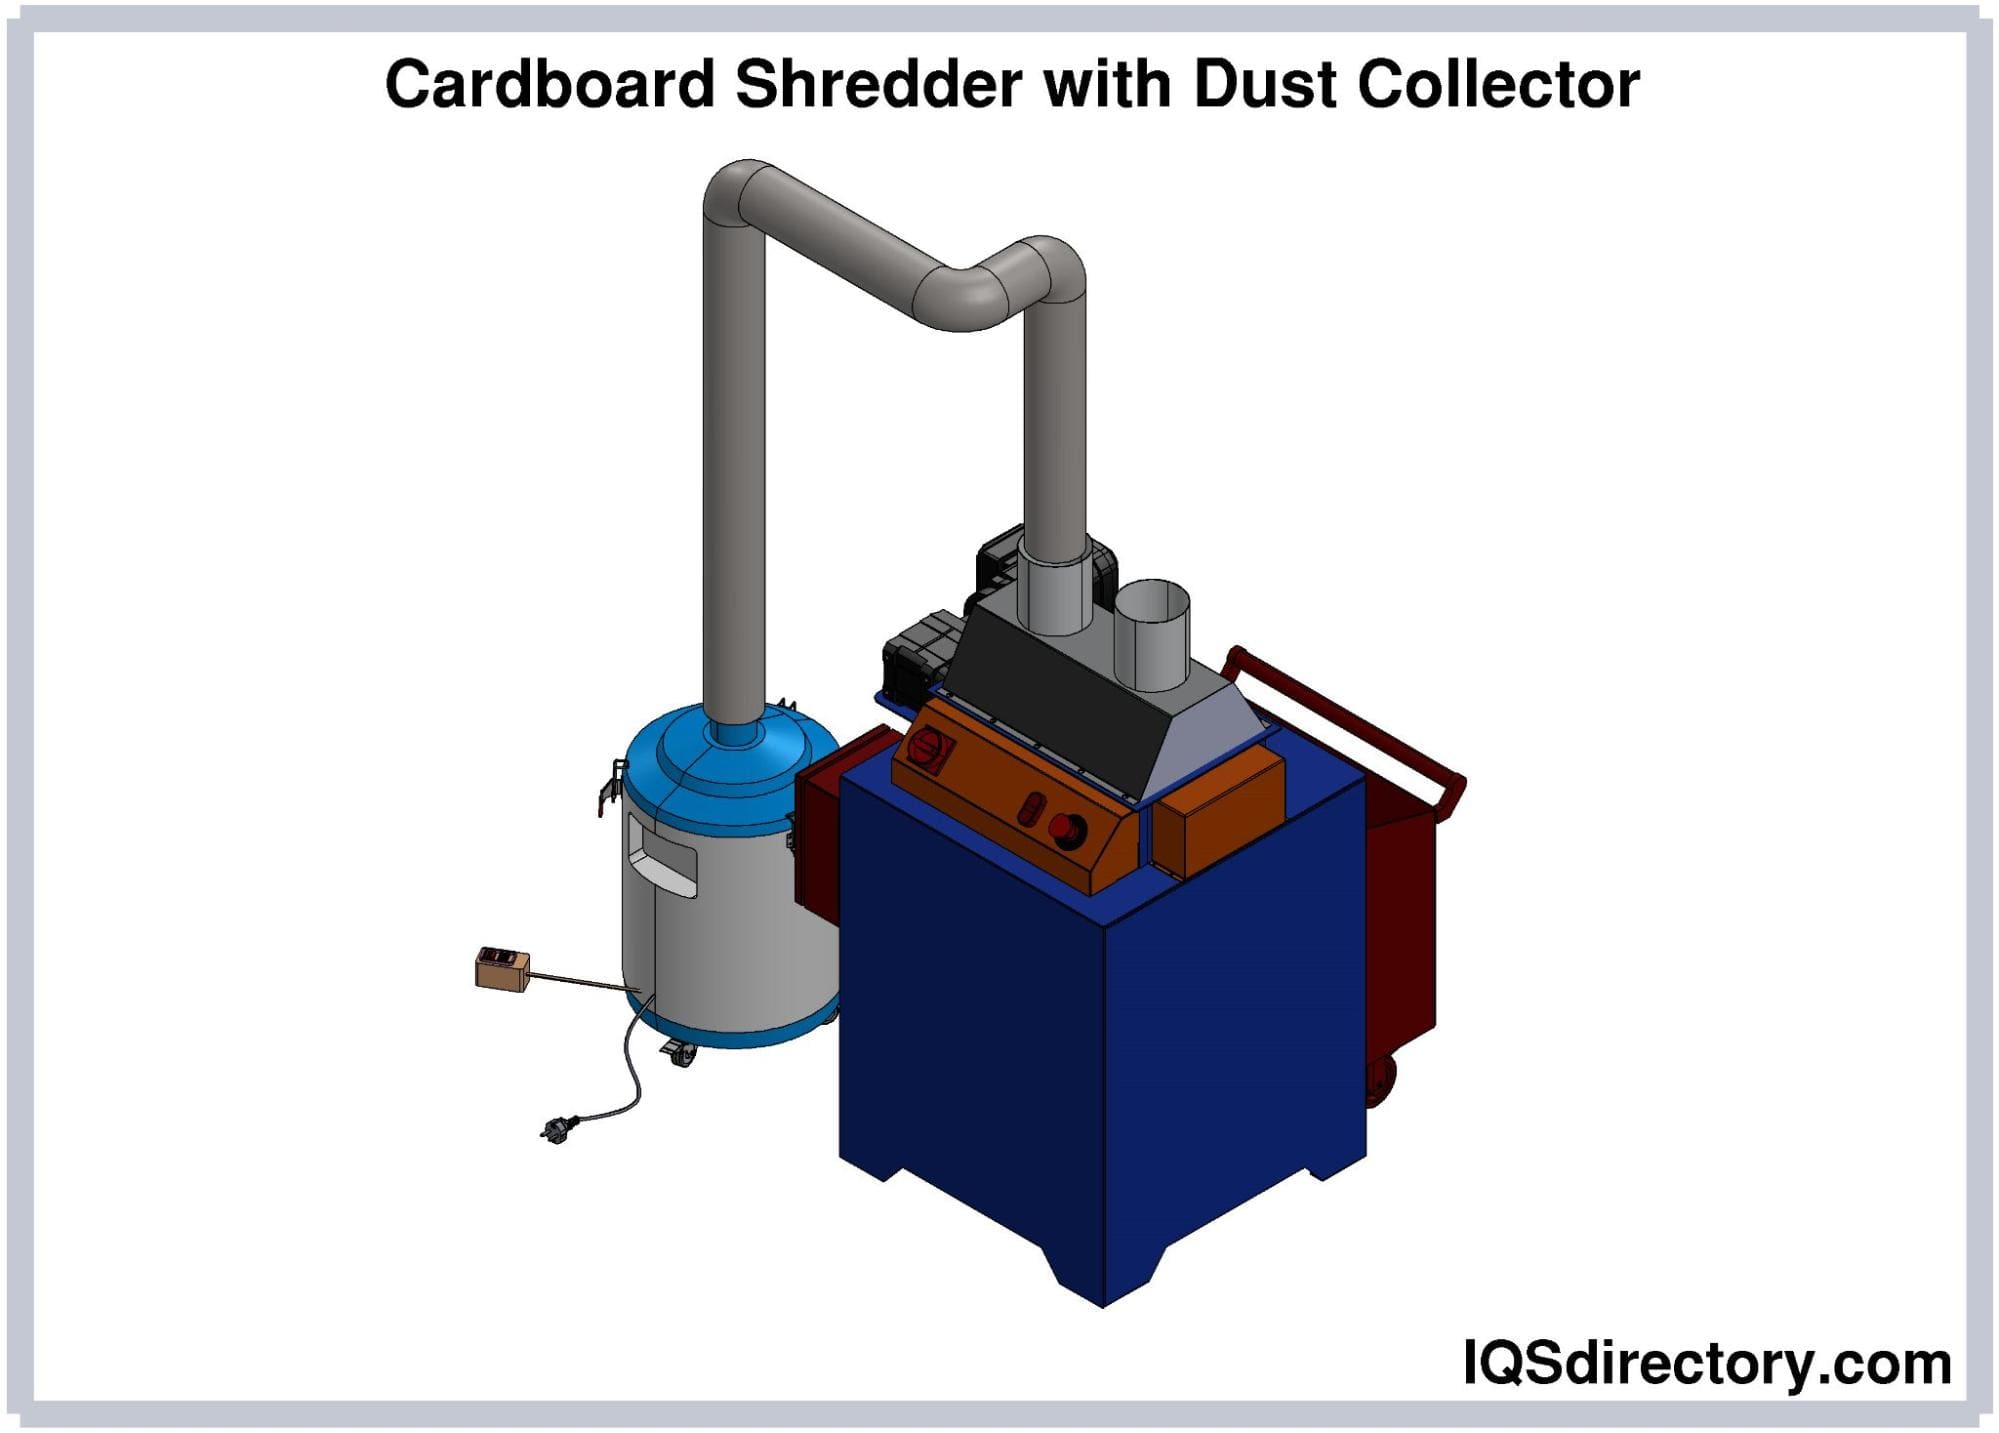 https://www.iqsdirectory.com/articles/shredder/cardboard-shredders/cardboard-shredder-with-dust-collector.jpg